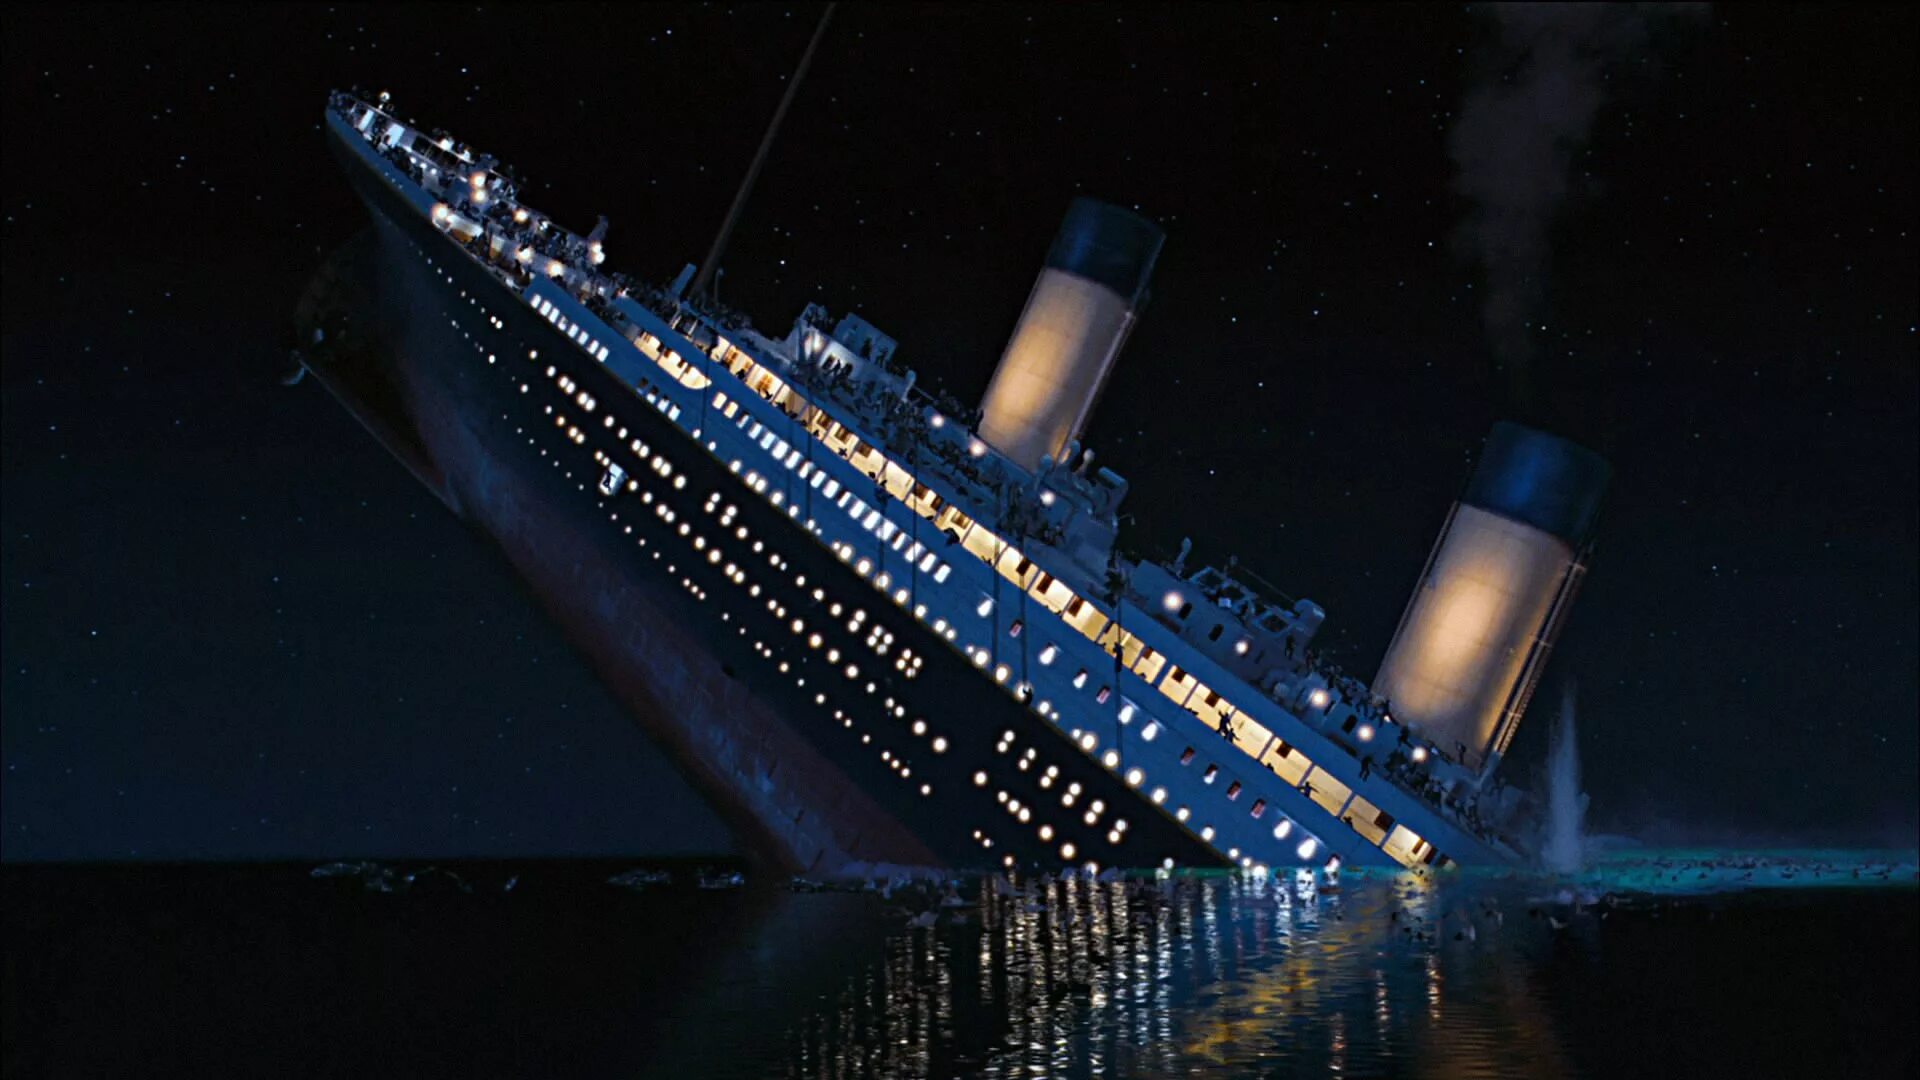 Титаник 1997. Титаник 1997 крушение. Титаник 1997 корабль. Сисель кюкербо титаник